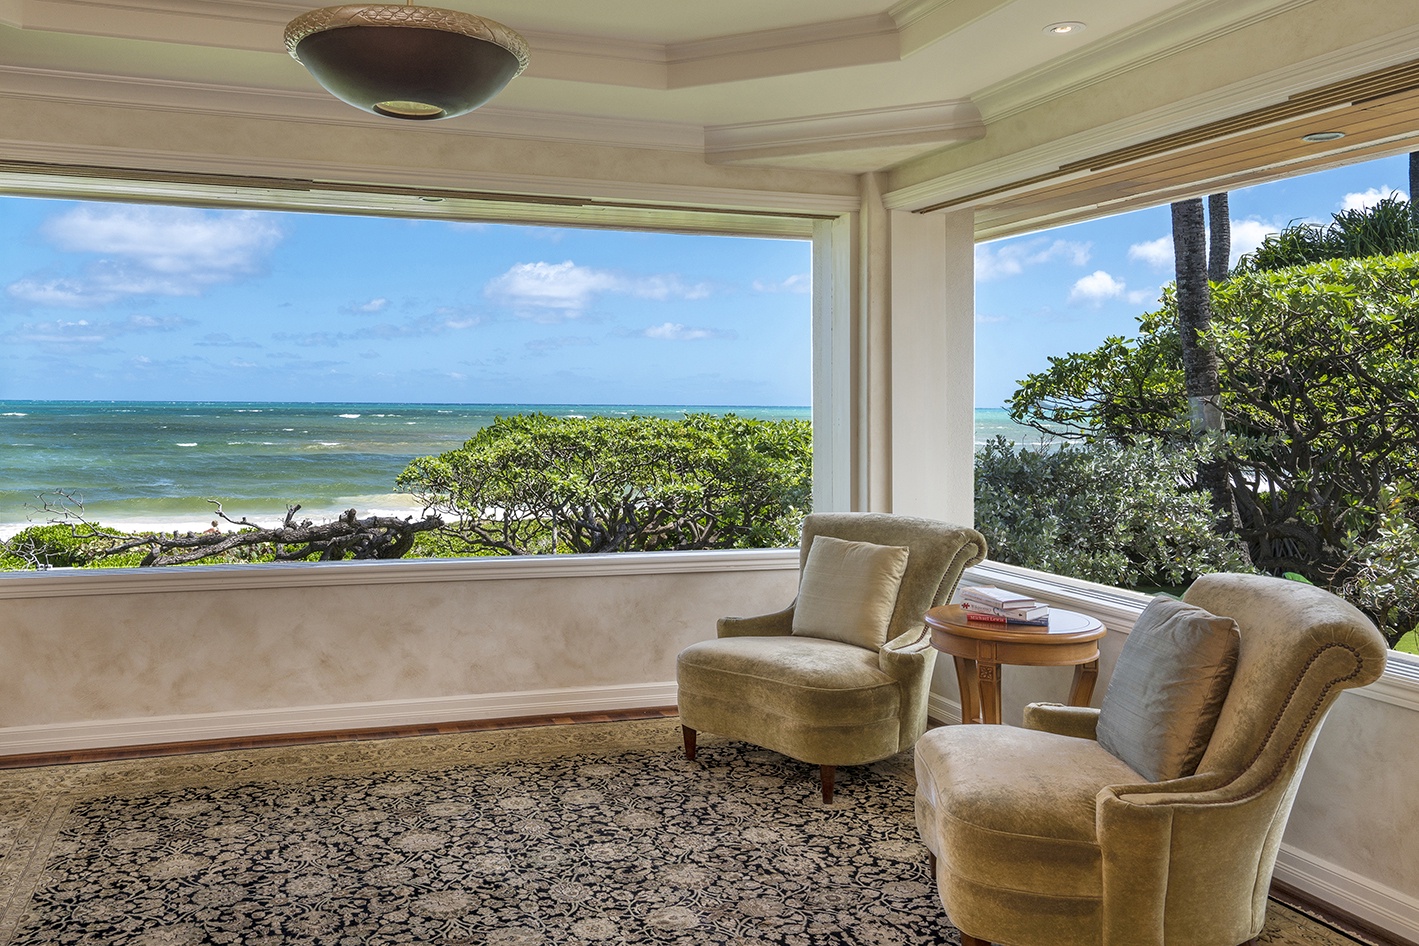 Kailua Vacation Rentals, Kailua's Kai Moena Estate - Main house: Windows fully open and welcome the ocean breeze.